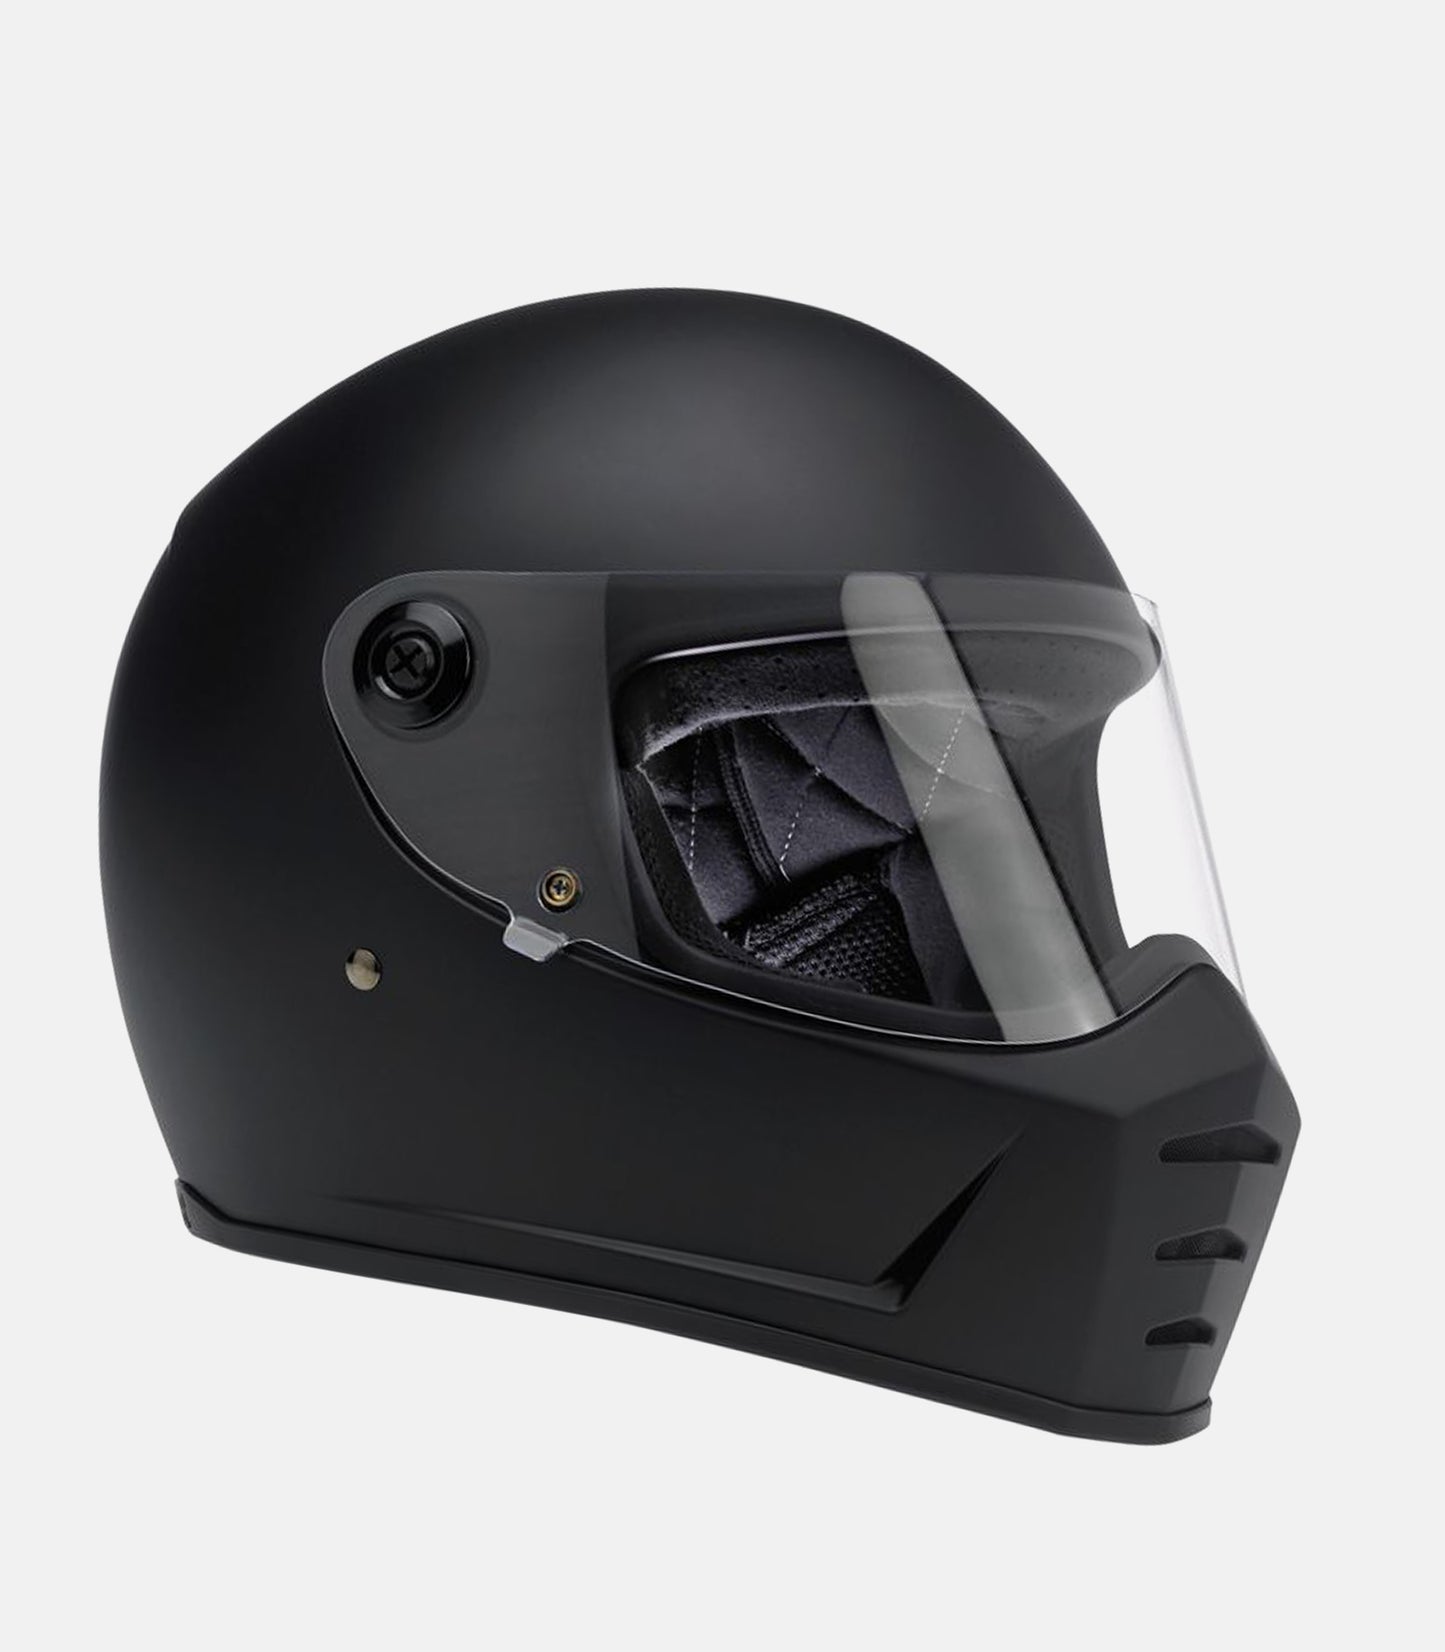 BILTWELL Lane Splitter ECE Helmet G1- Flat Black